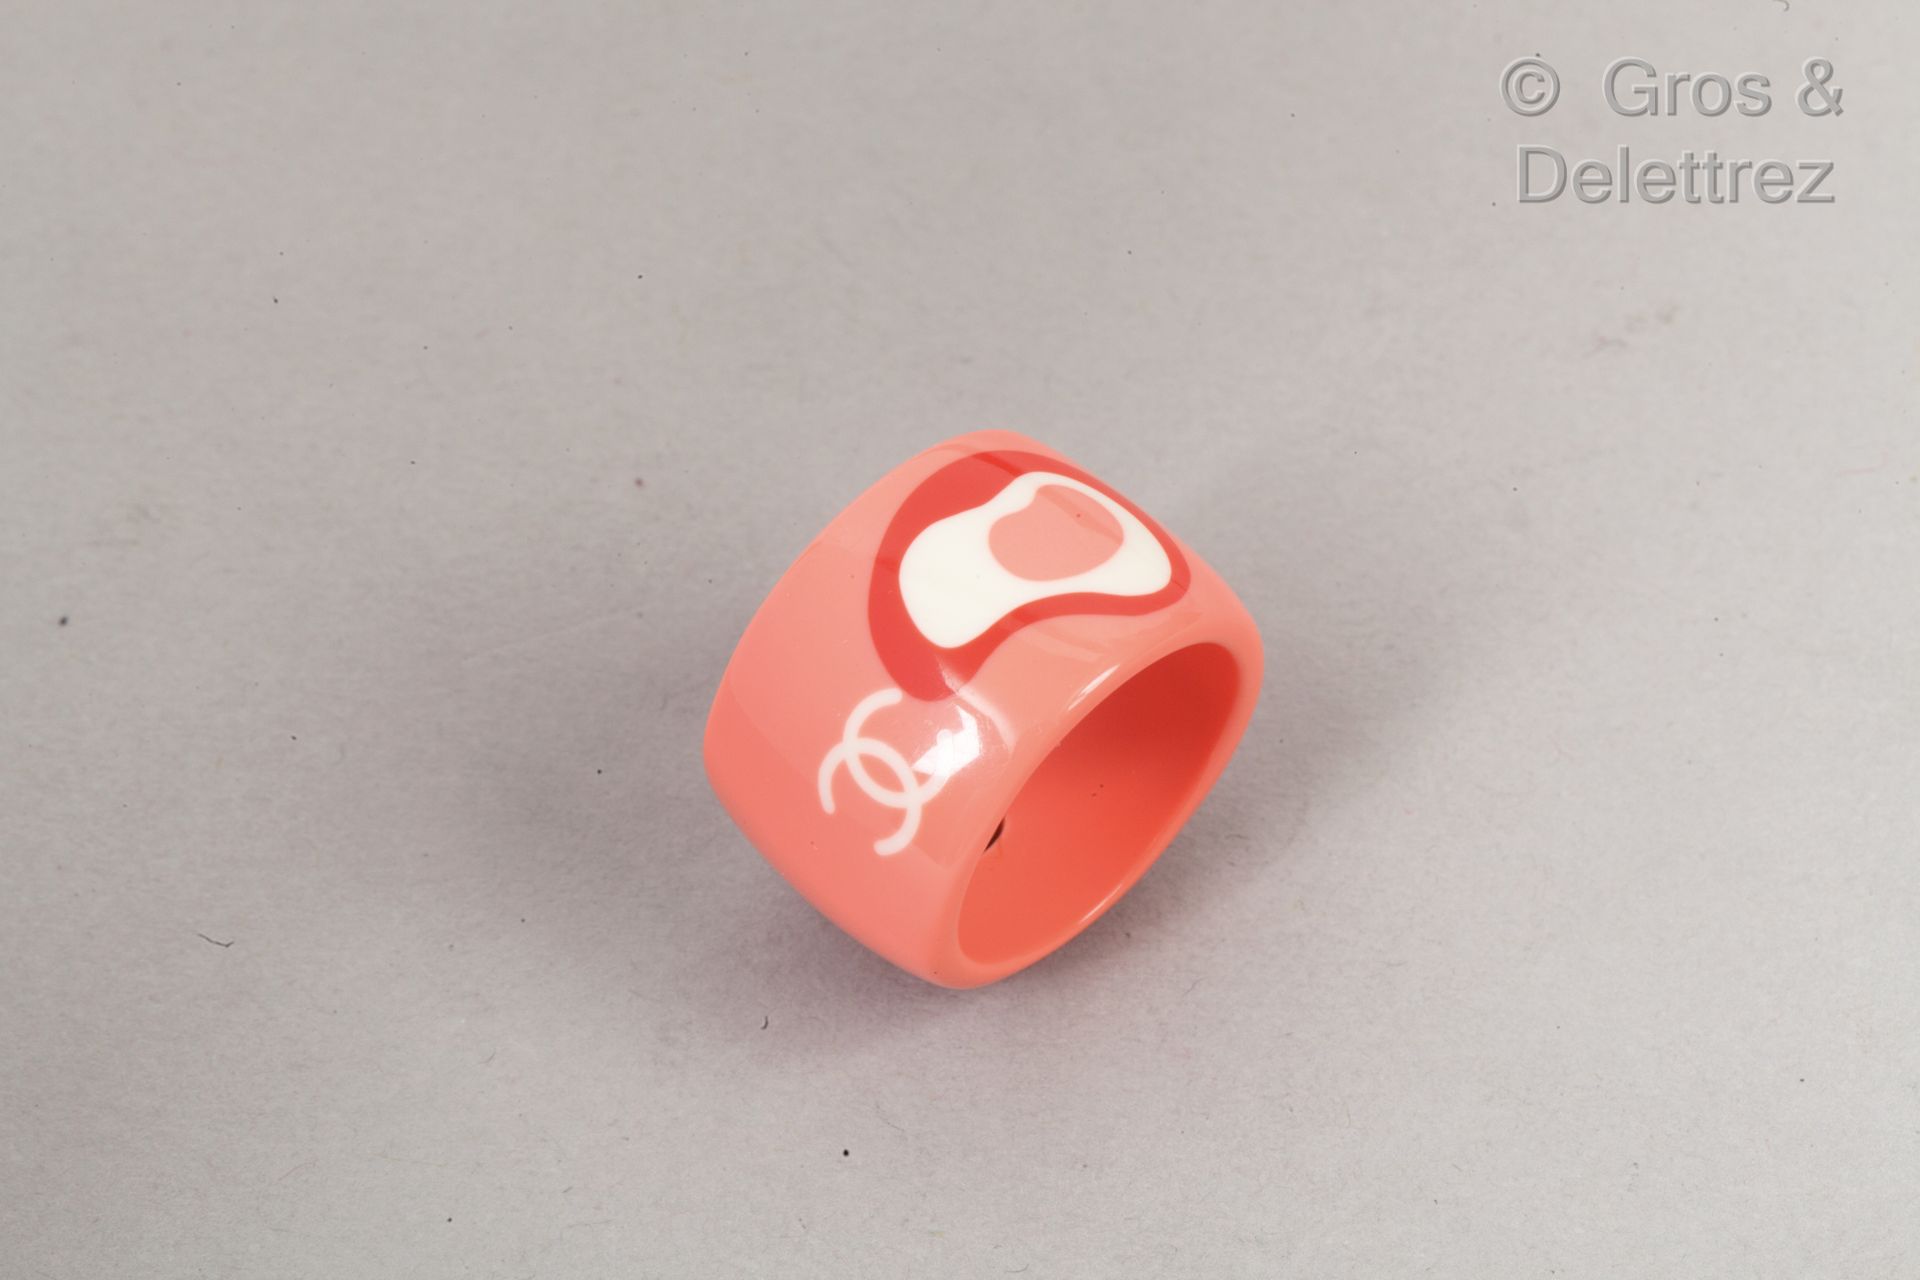 CHANEL par Karl LAGERFELD 2003年春夏高级成衣系列

粉红色的树脂戒指，装饰有该品牌的标志，并以一个图案作为底纹。盘上有签名。